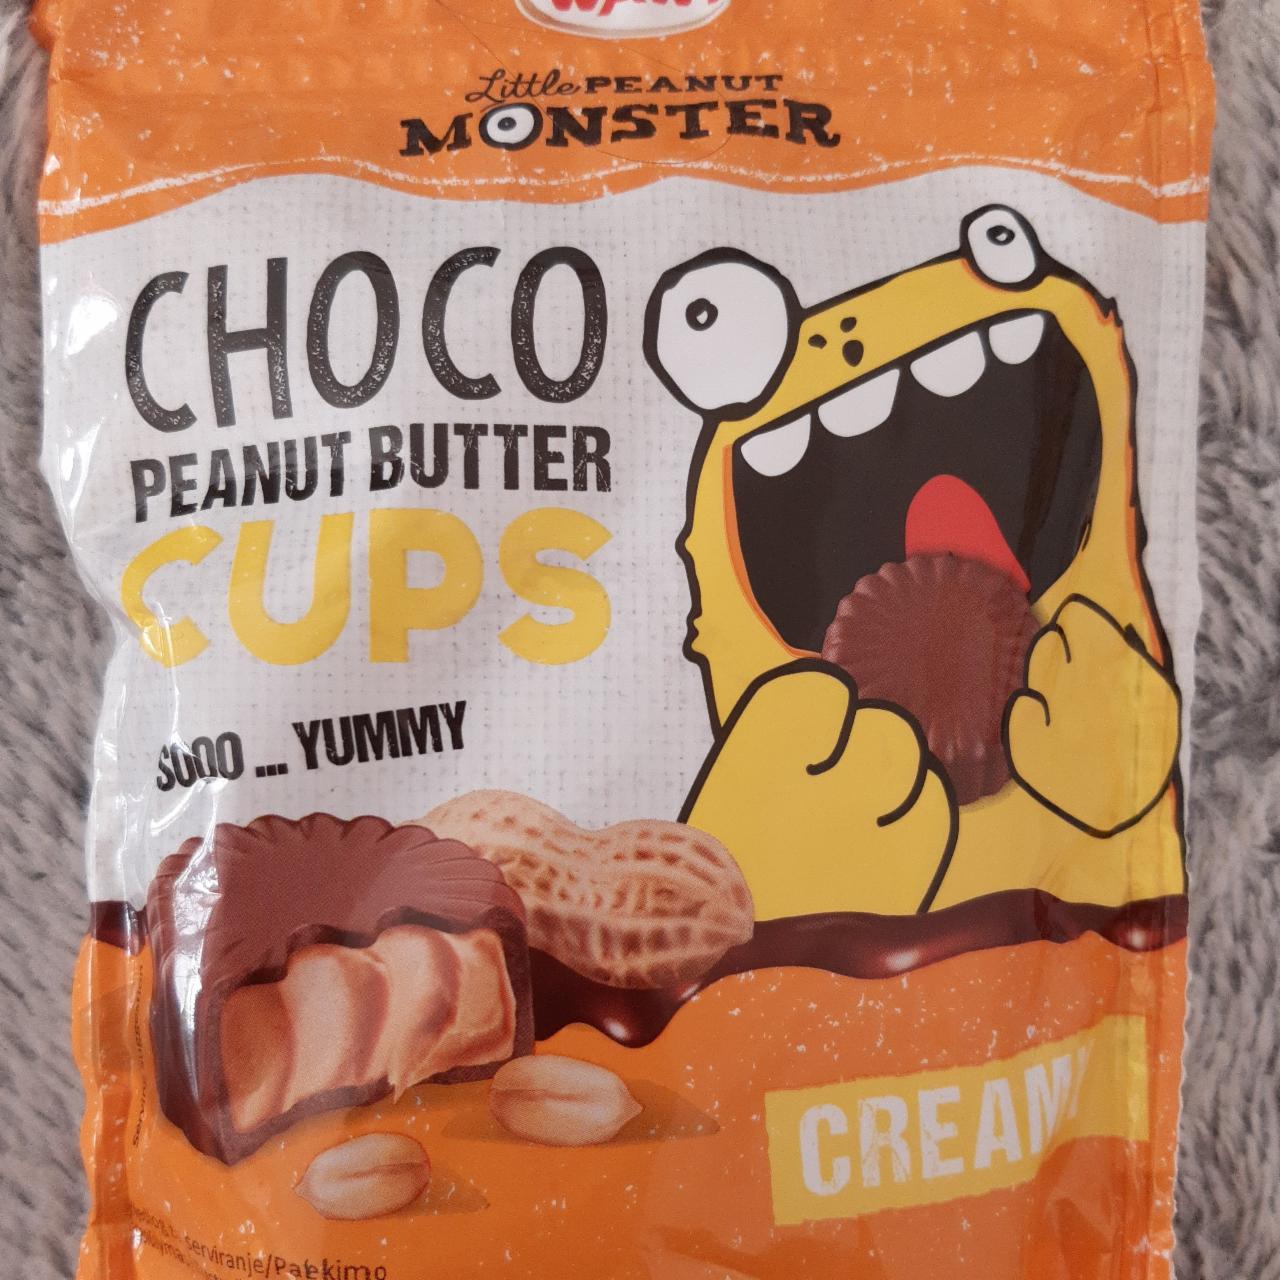 Fotografie - Choco peanut butter cups Little peanut monster Wawi